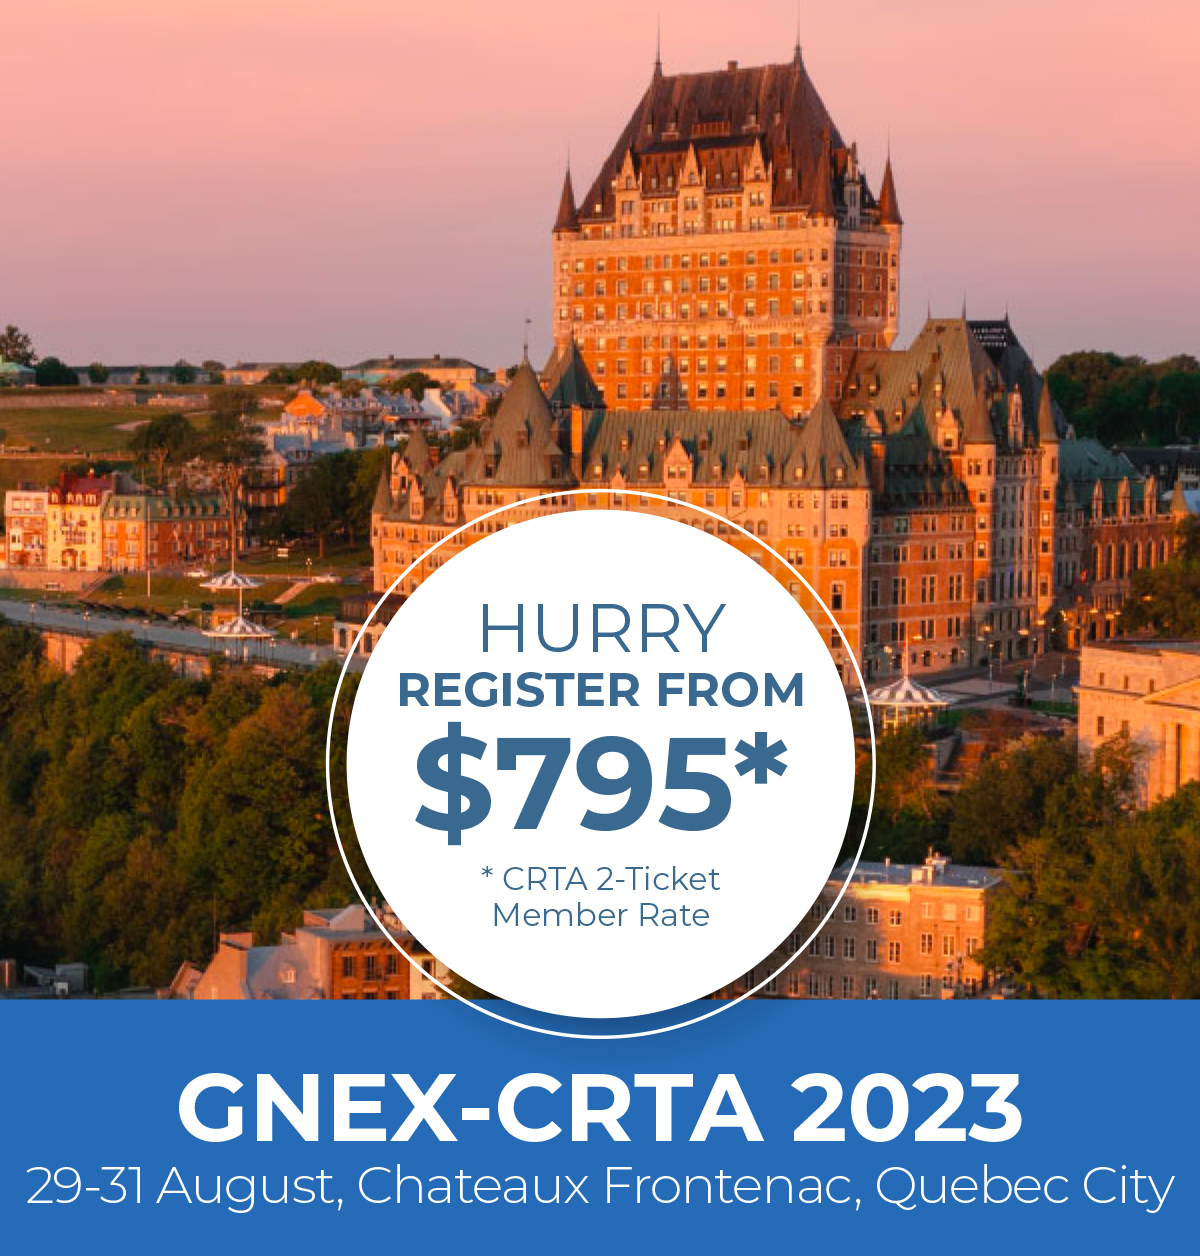 GNEX-CRTA 2023 Conference